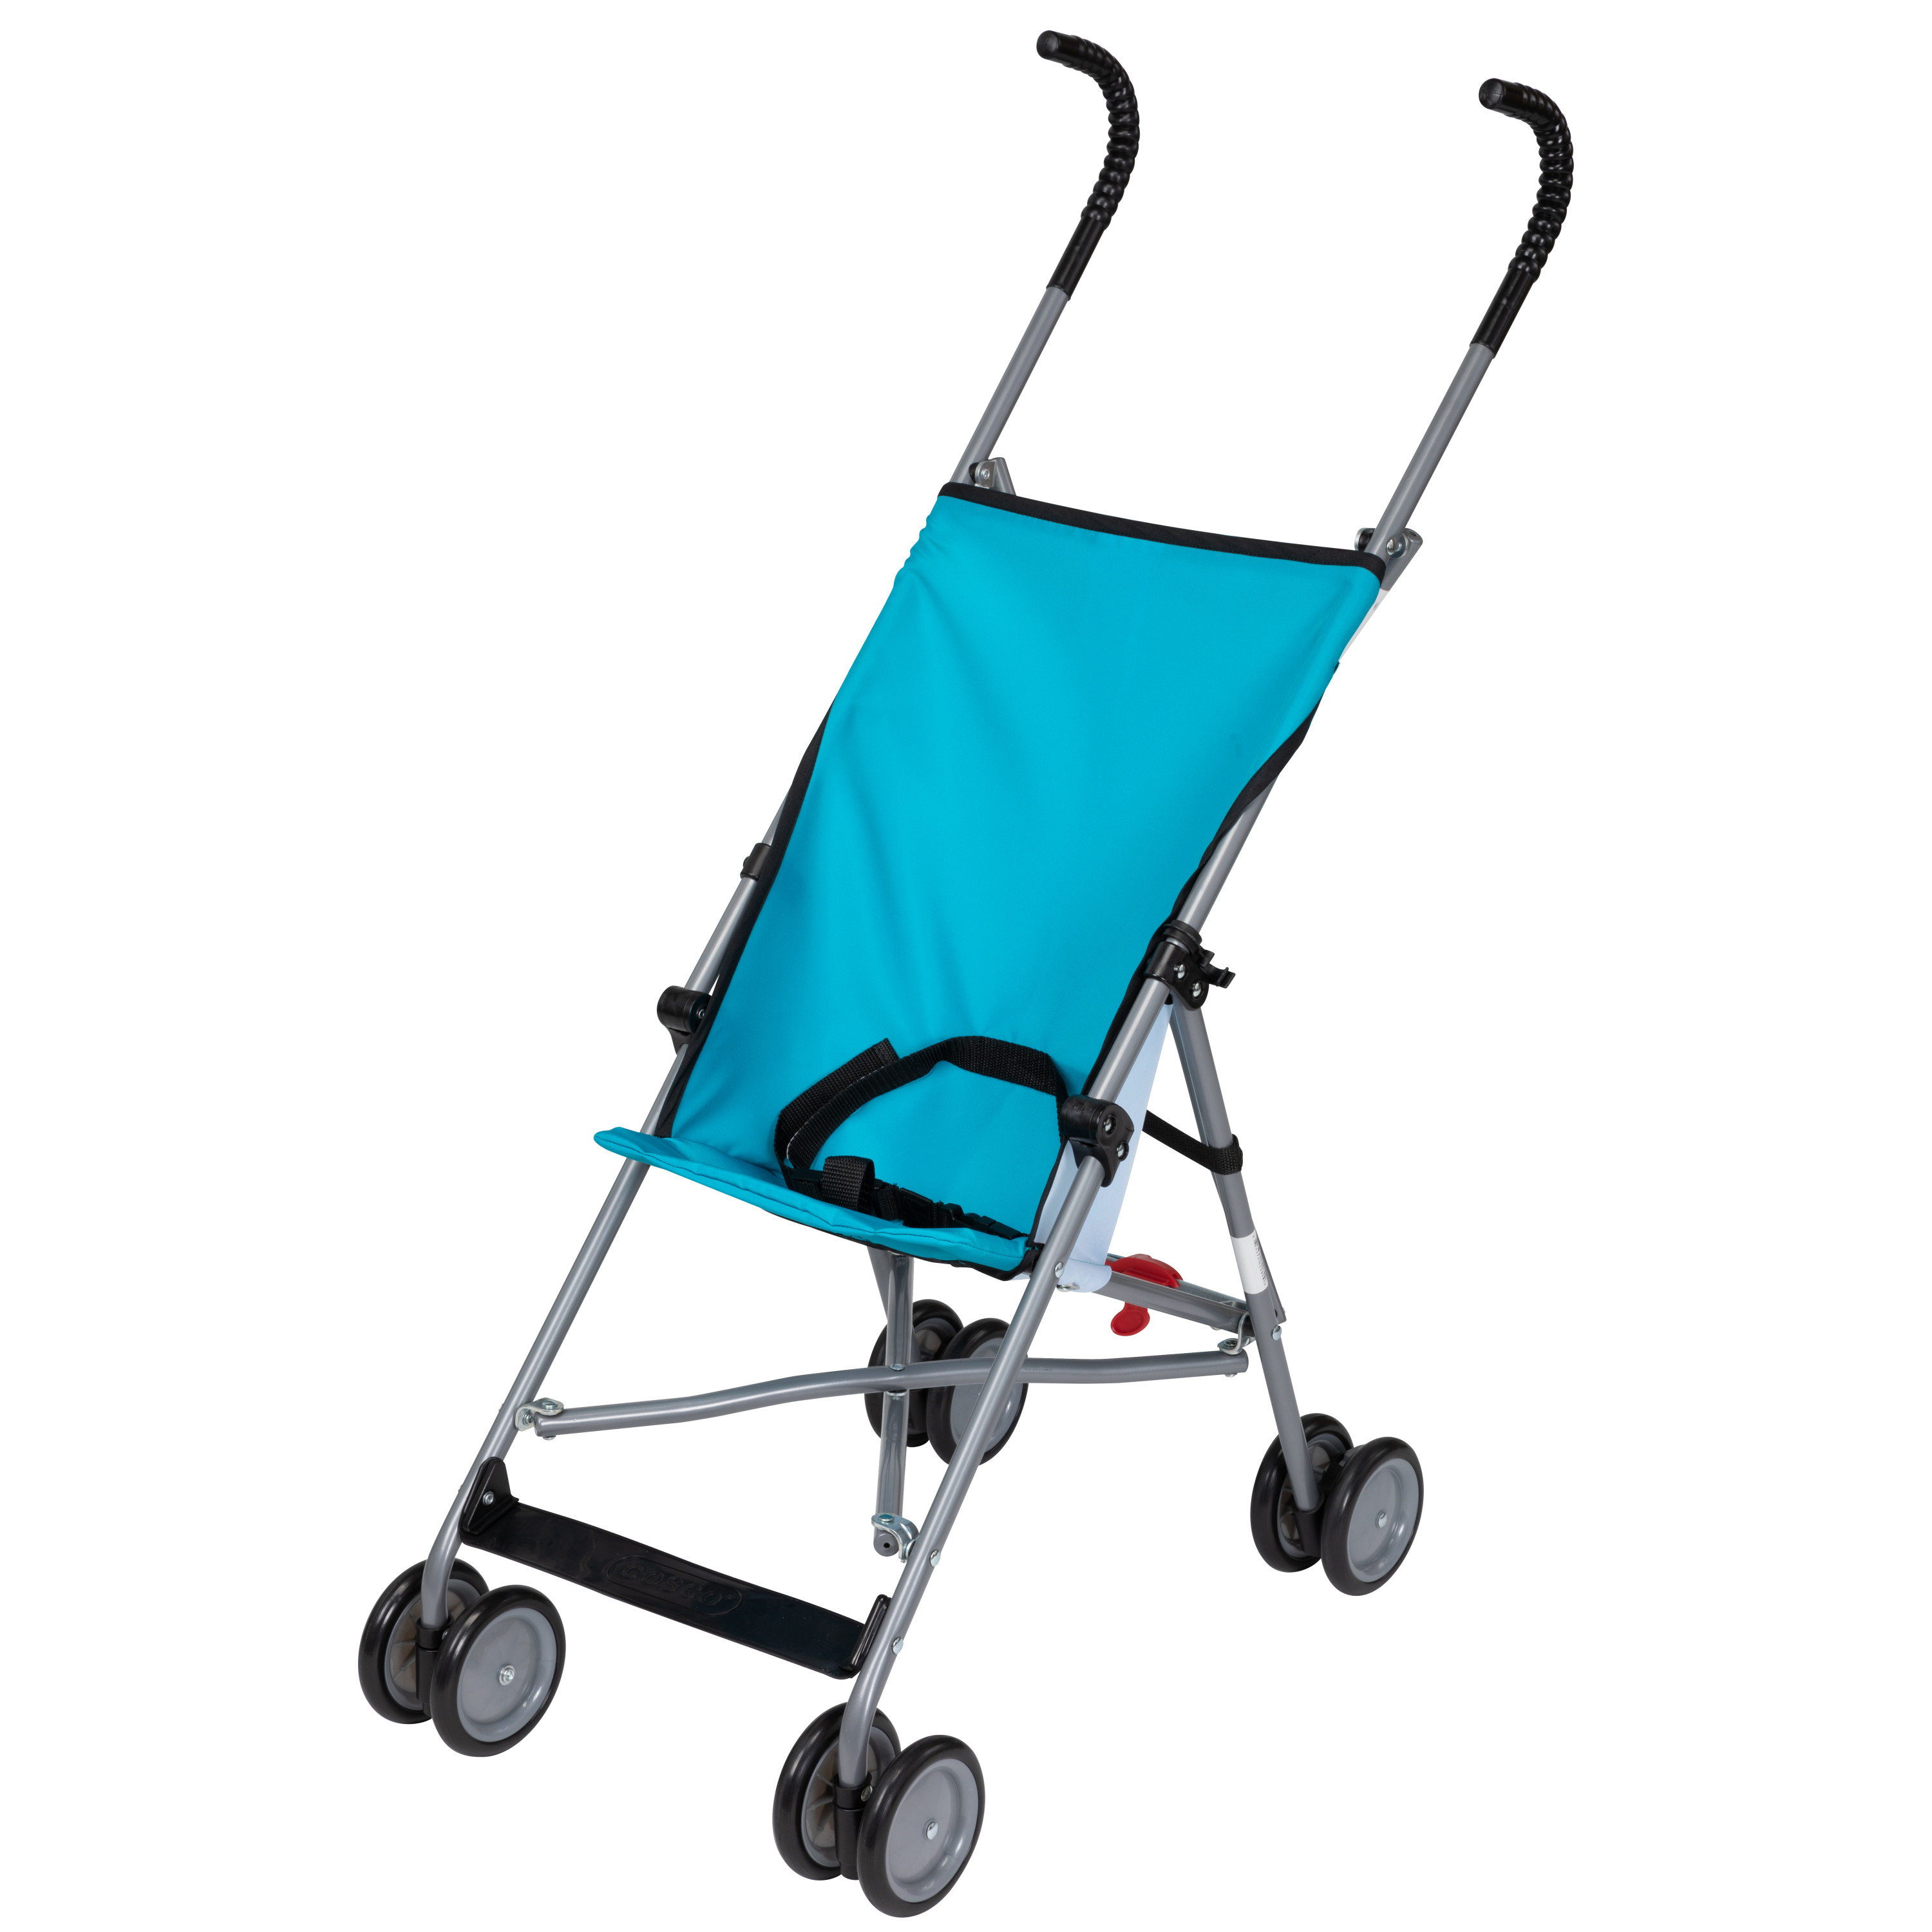 Cosco Kids Comfort Height Umbrella Stroller, Freshwater Turquoise - image 1 of 8